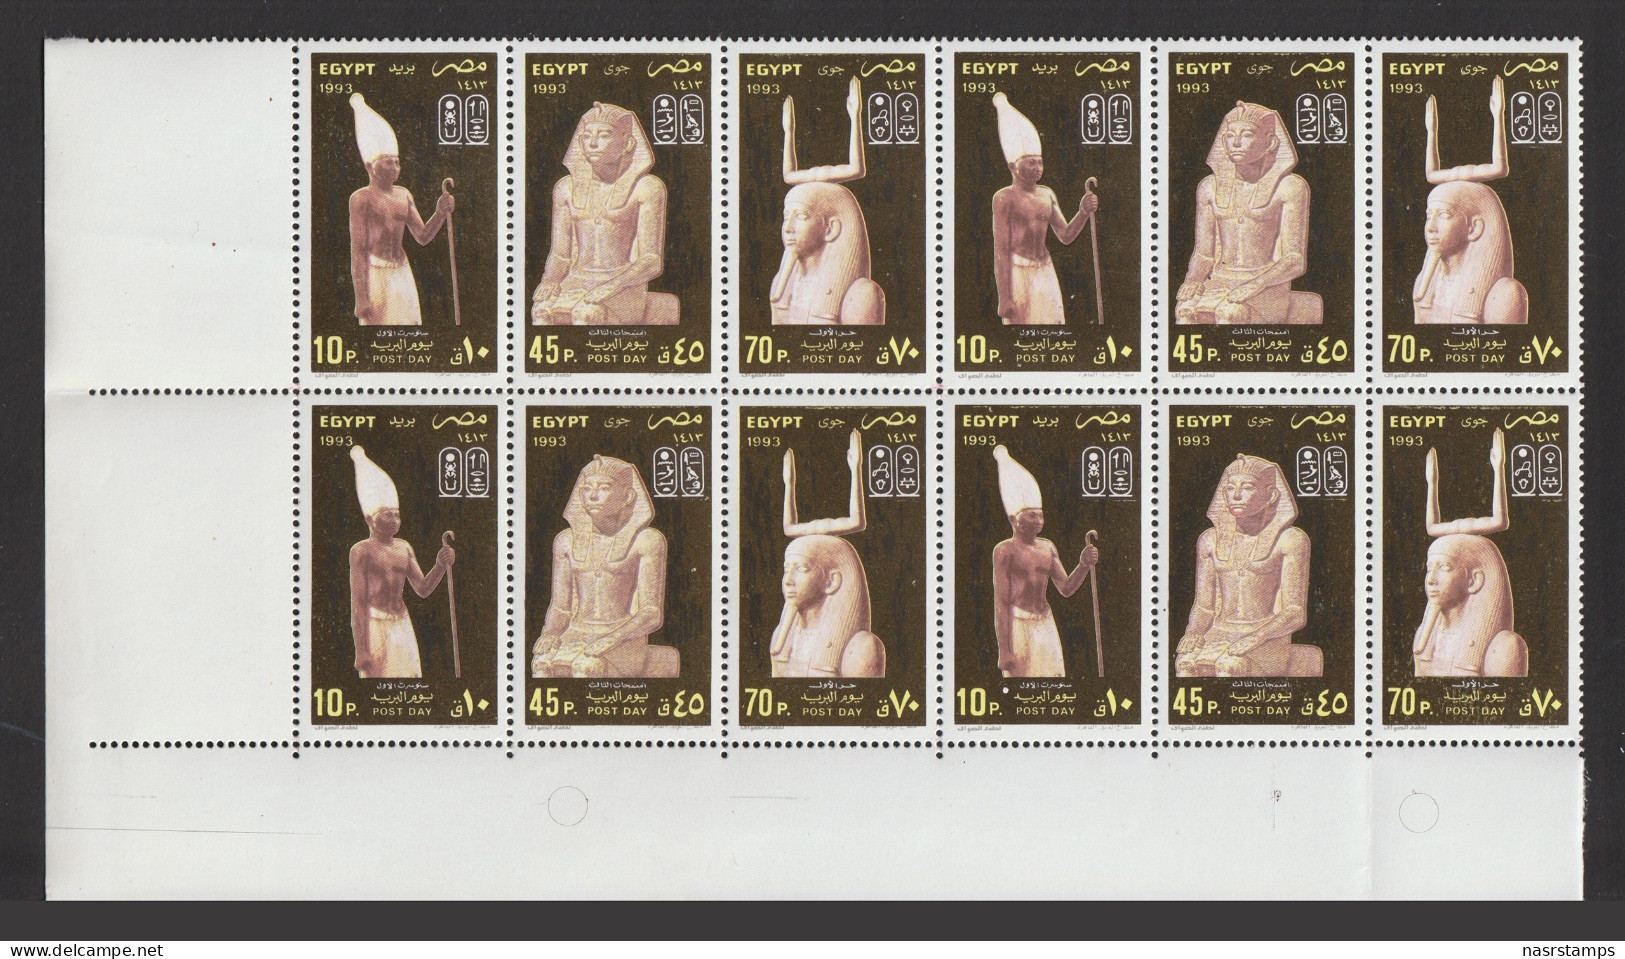 Egypt - 1993 - Block Of 4 Set - ( Post Day - Sesostris, Amenemhet III & Hur I ) - MNH (**) - Nuovi